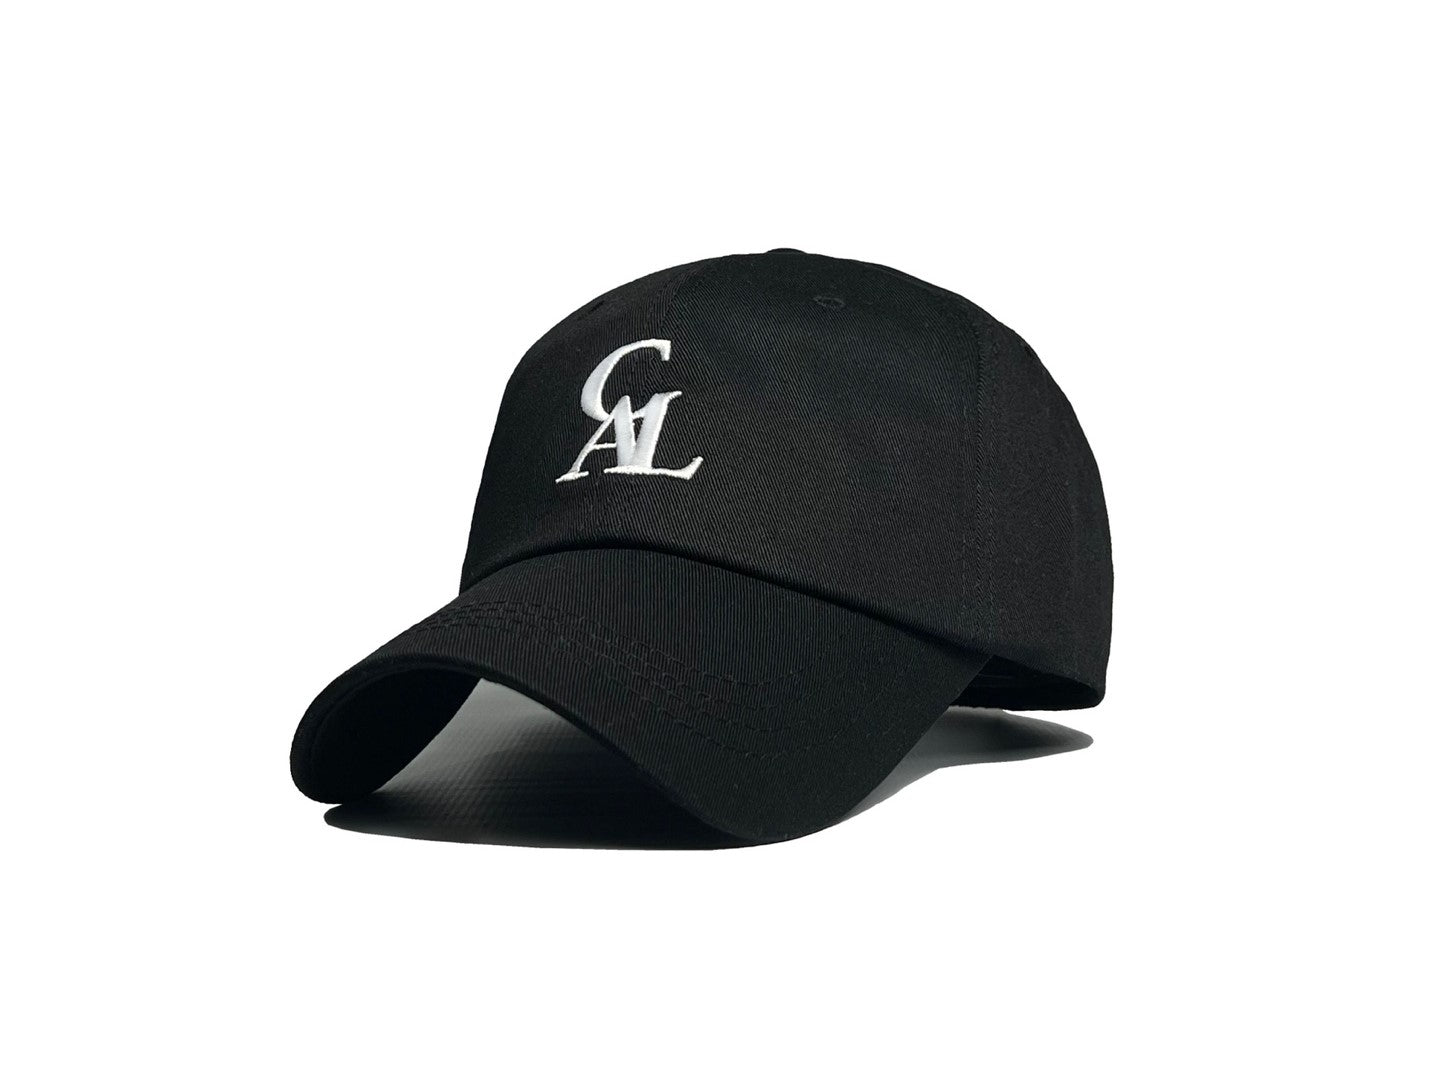 Signature logo ball cap - black